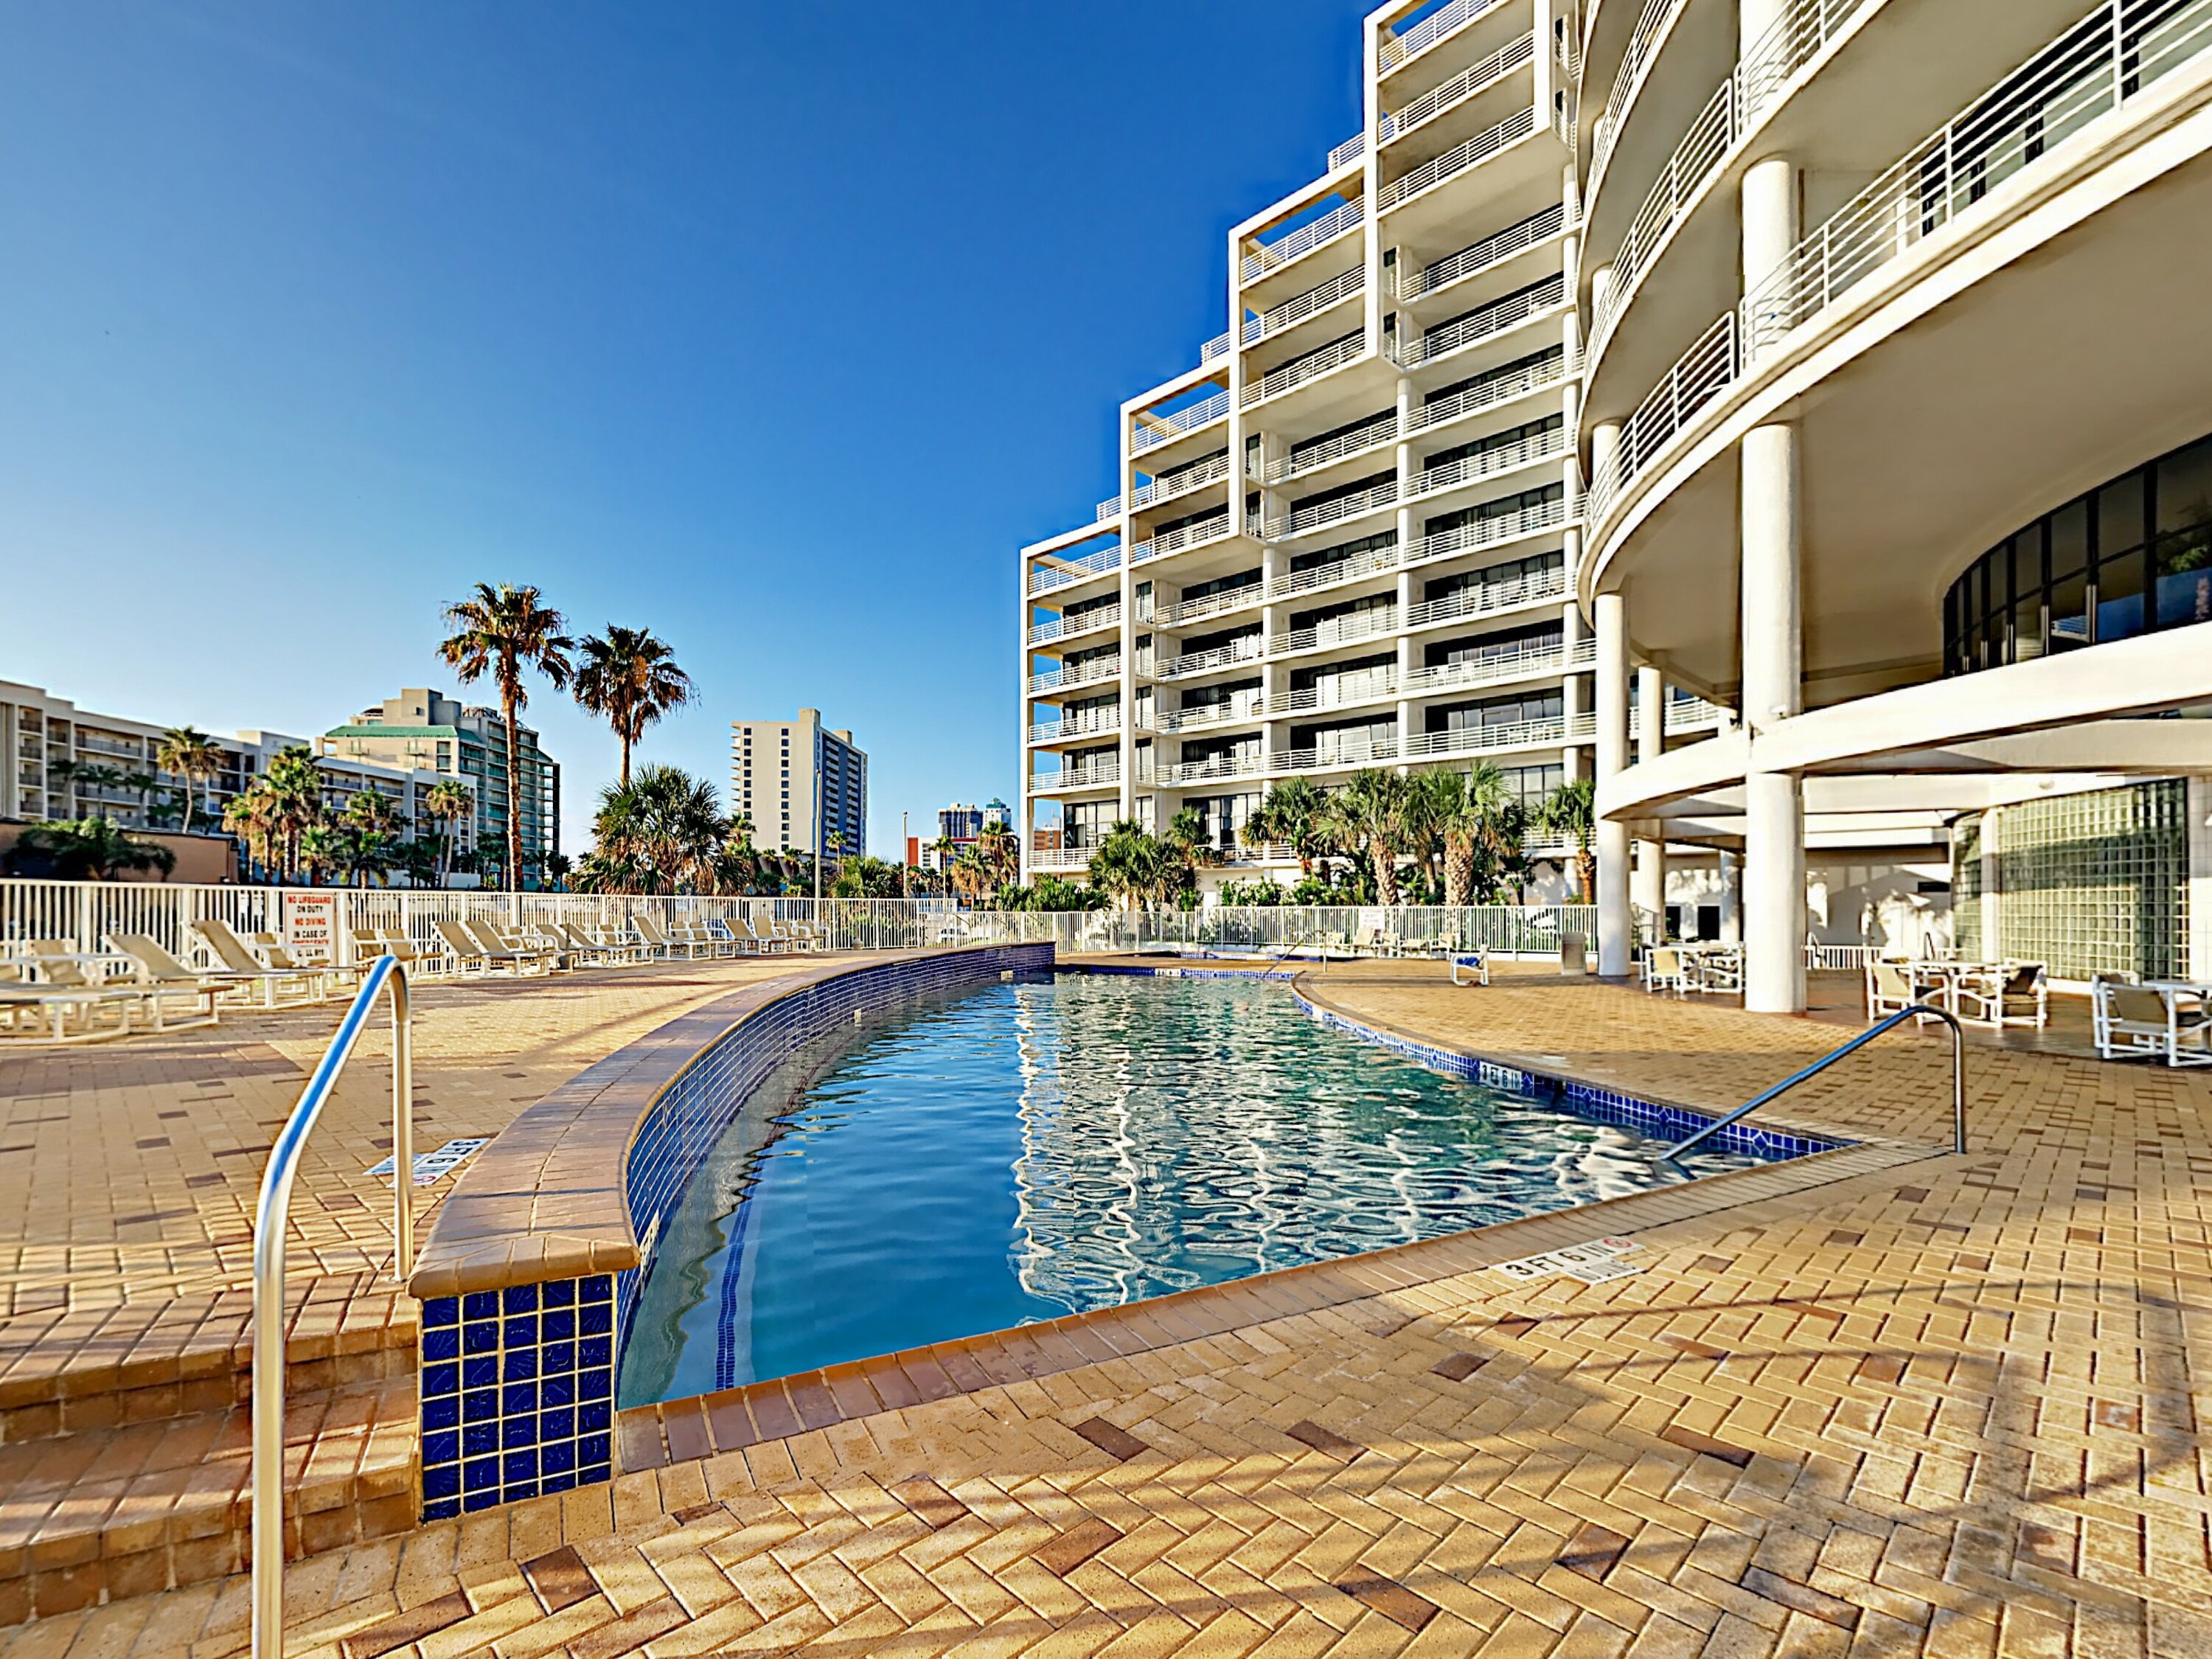 Take a dip in the sleek on-site pool.